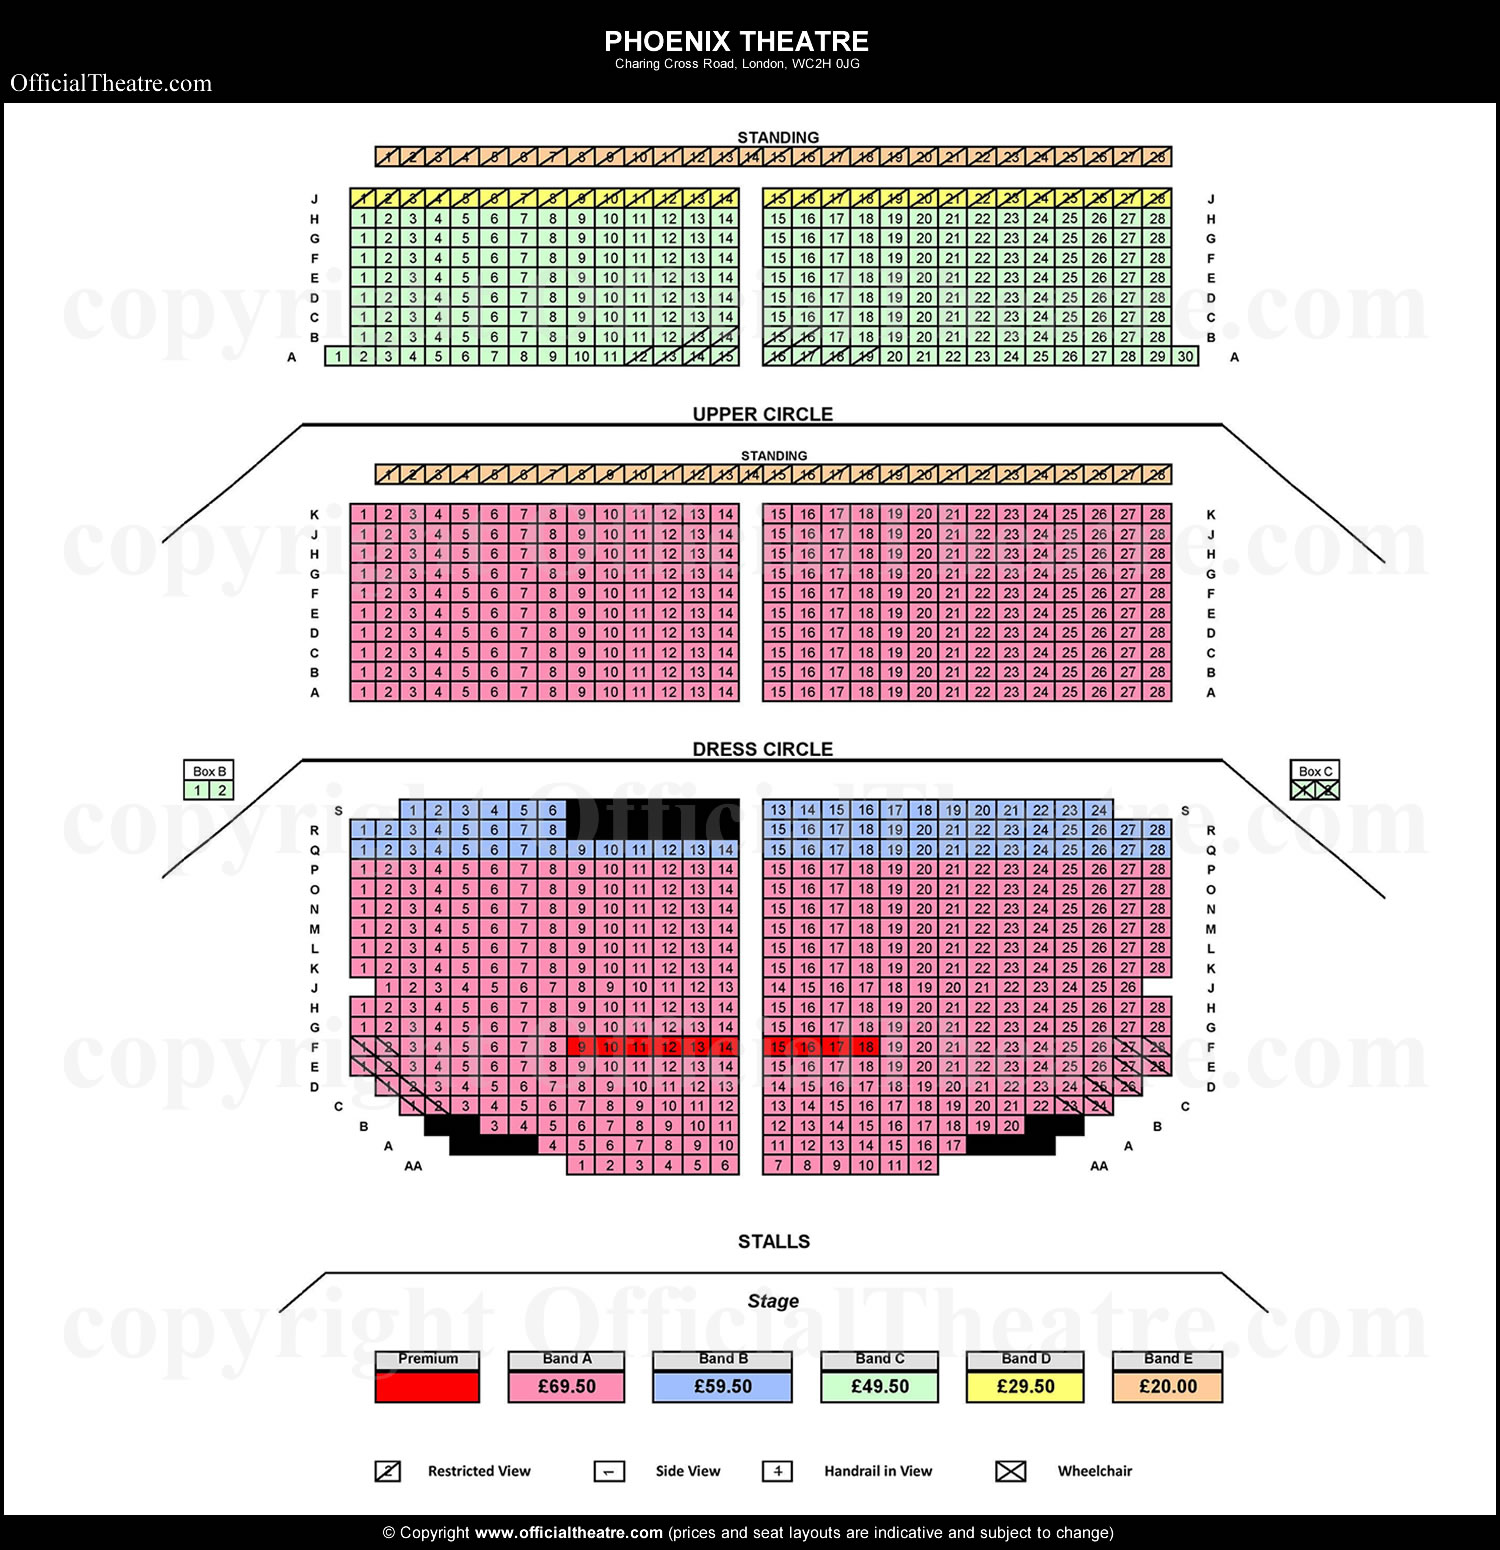 Phoenix Theatre seating plan